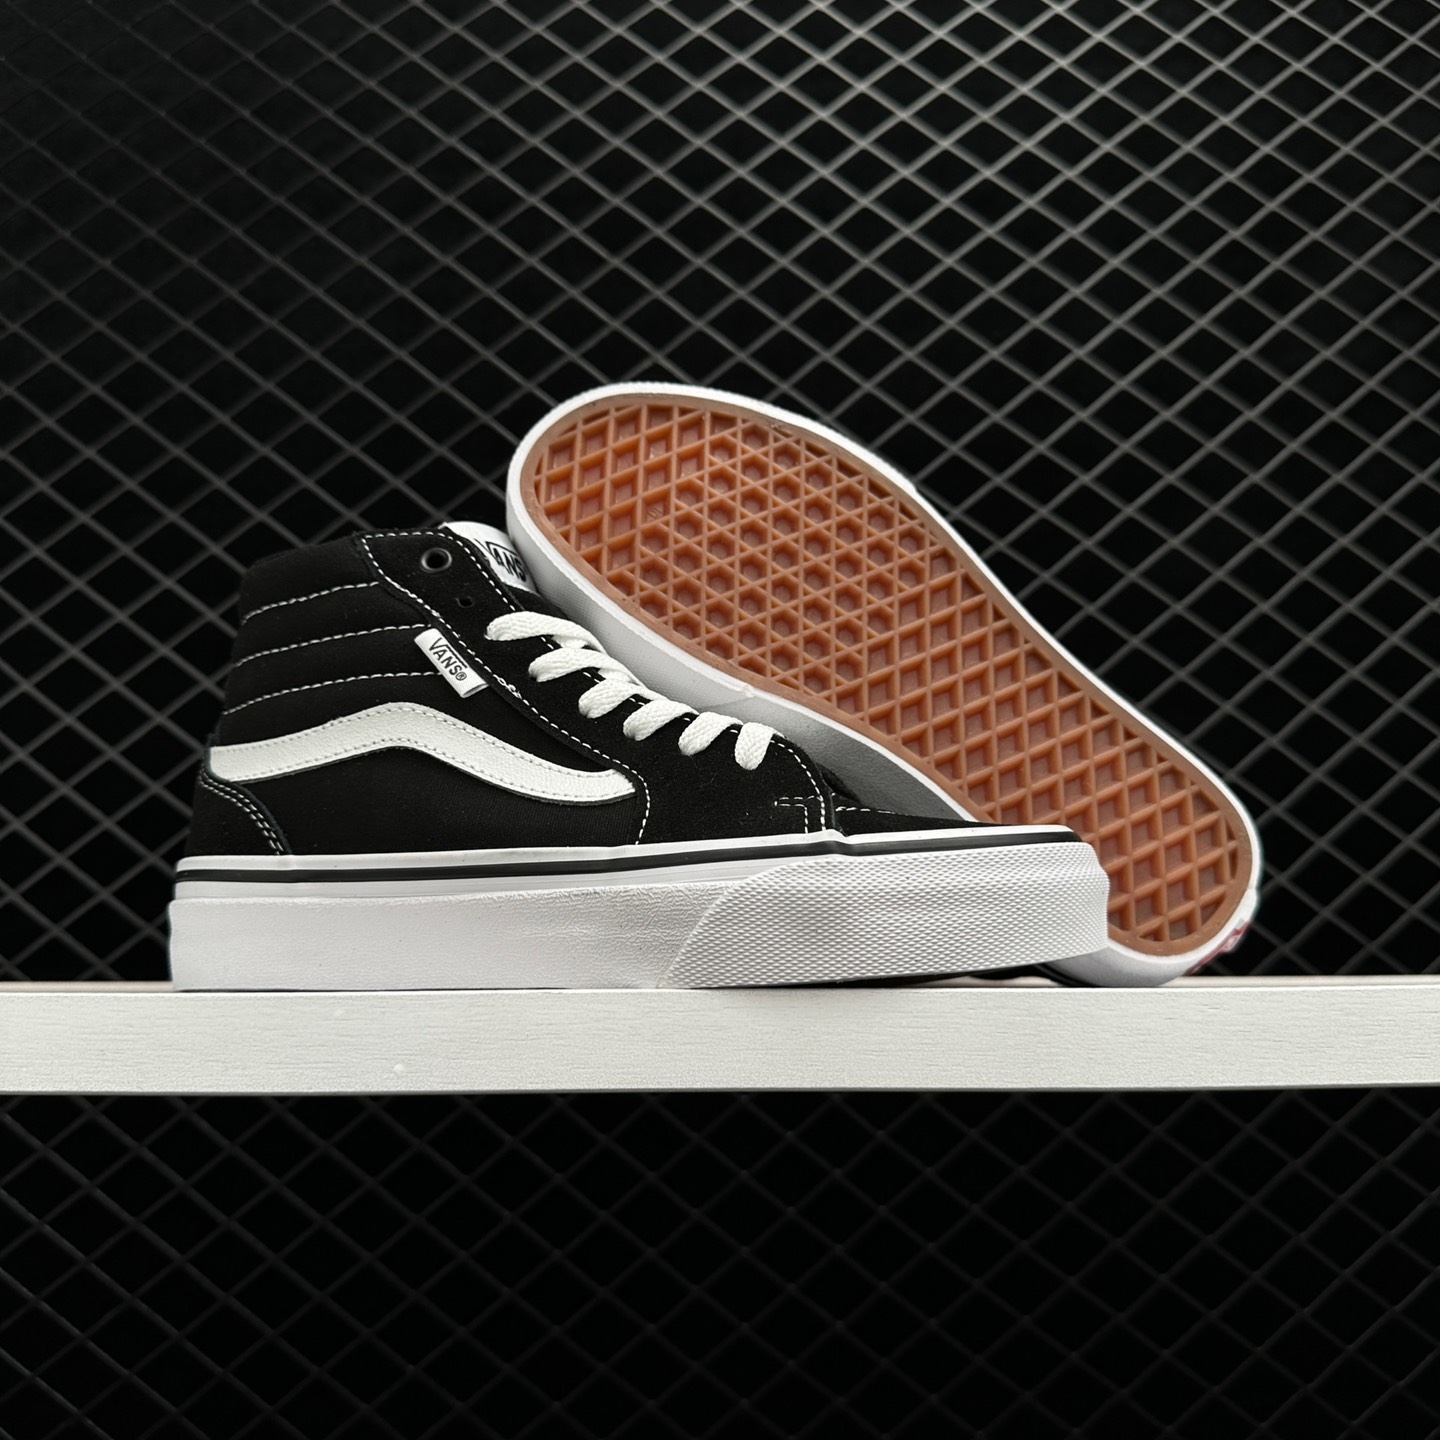 Vans Filmore Hi Platform Black White Skate Shoes - Stylish and Versatile Footwear